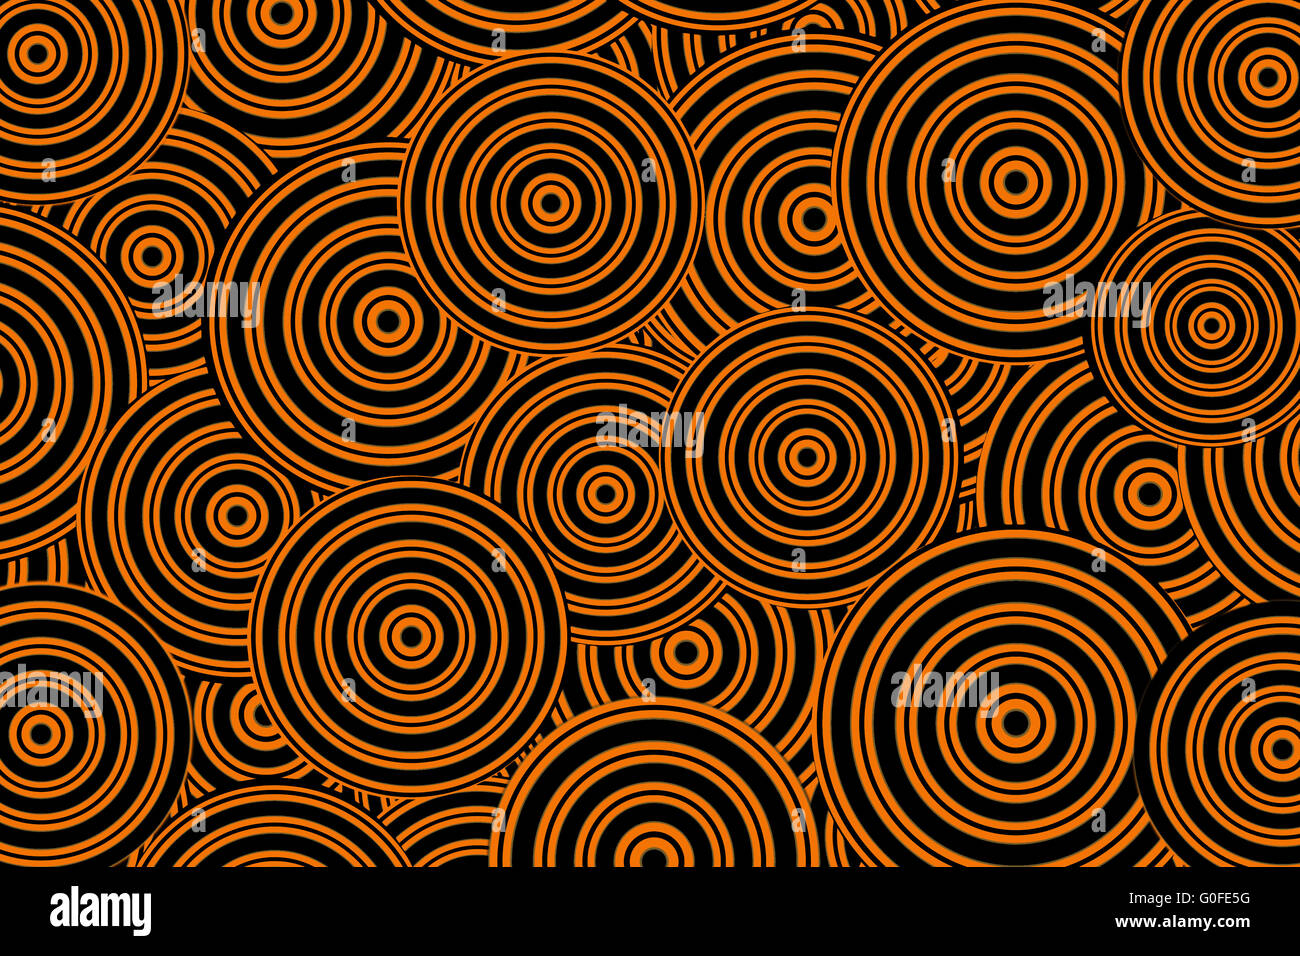 background with a large orange- black circles Stock Photo